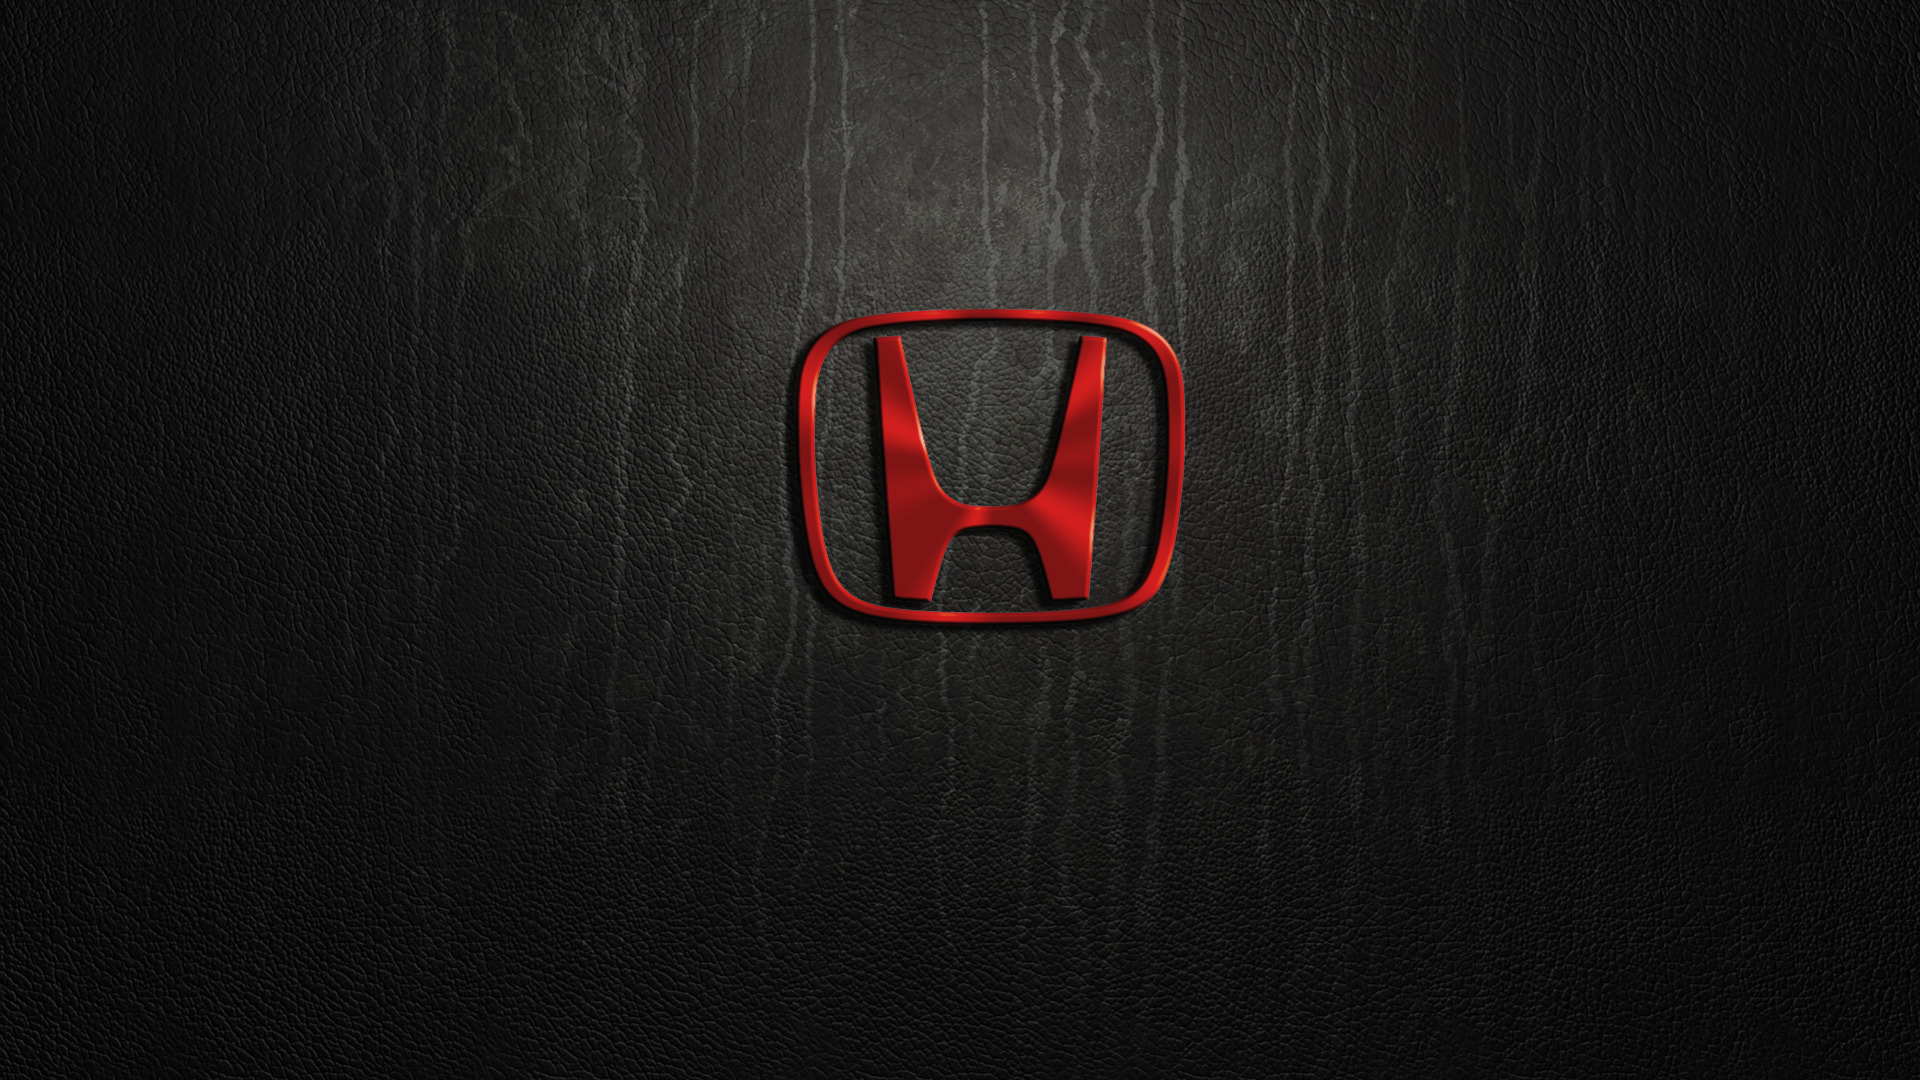 Honda Hd Wallpaper Background Image 19x1080